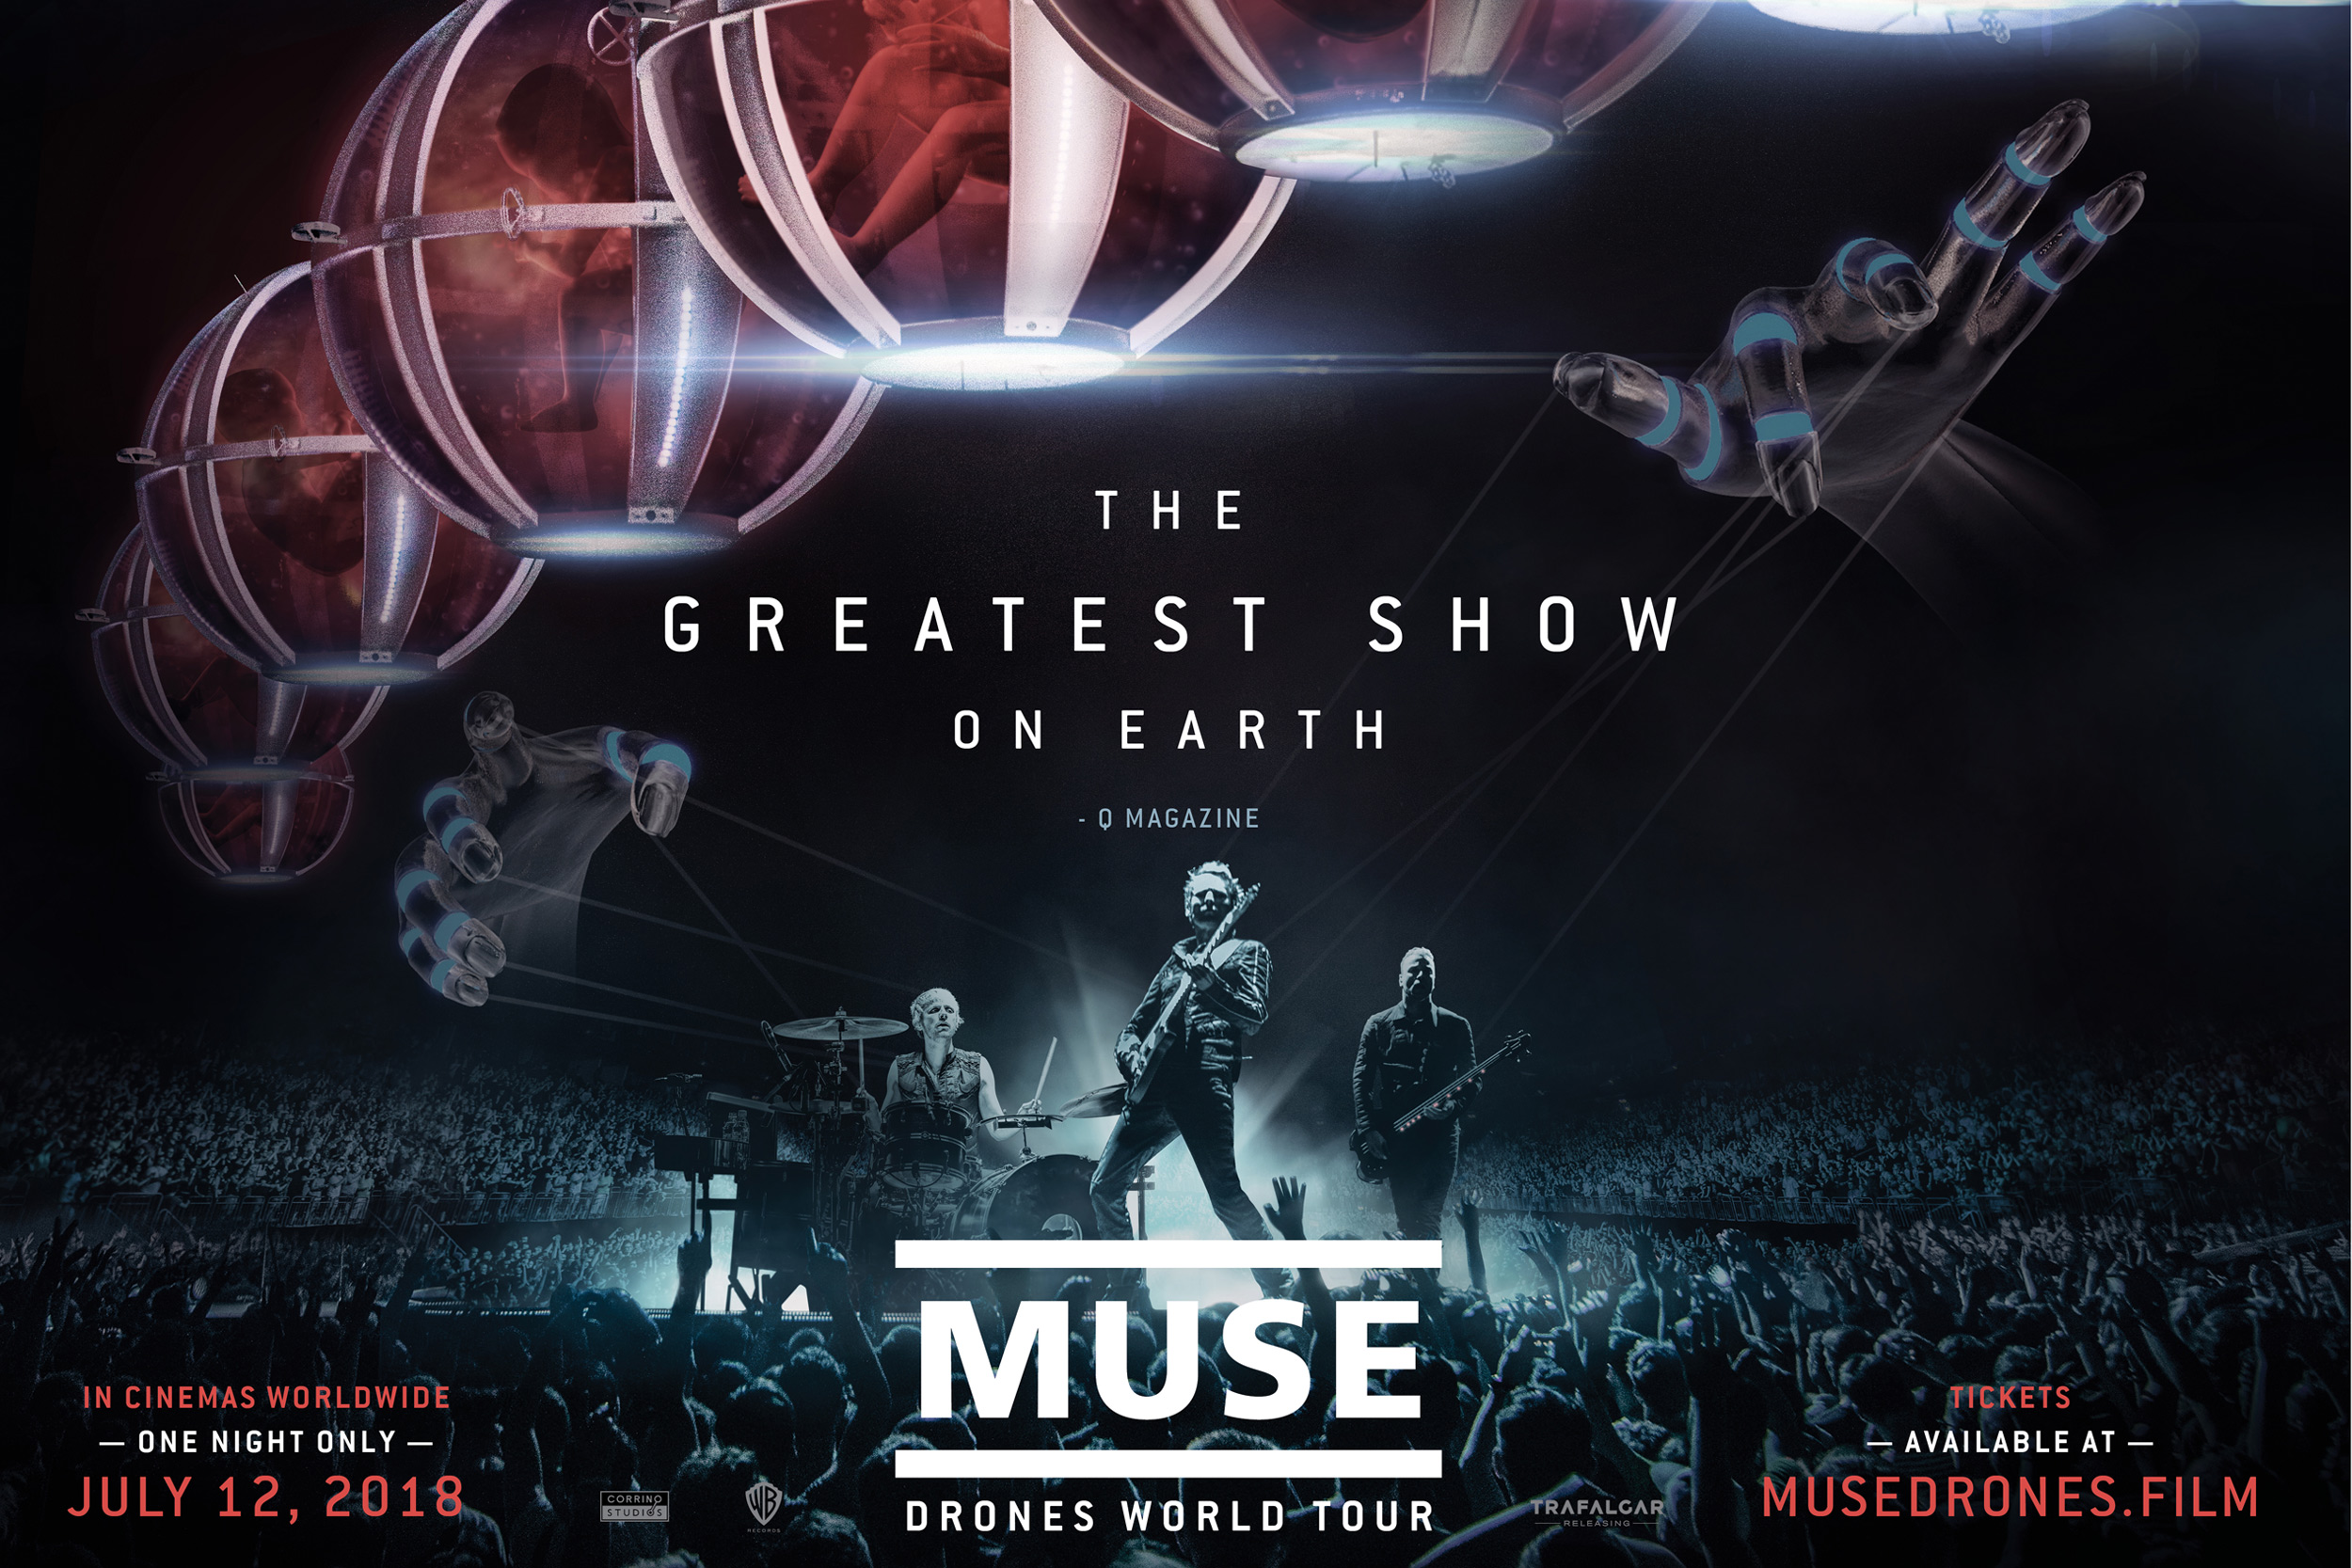 MUSE - "DRONES WORLD TOUR"